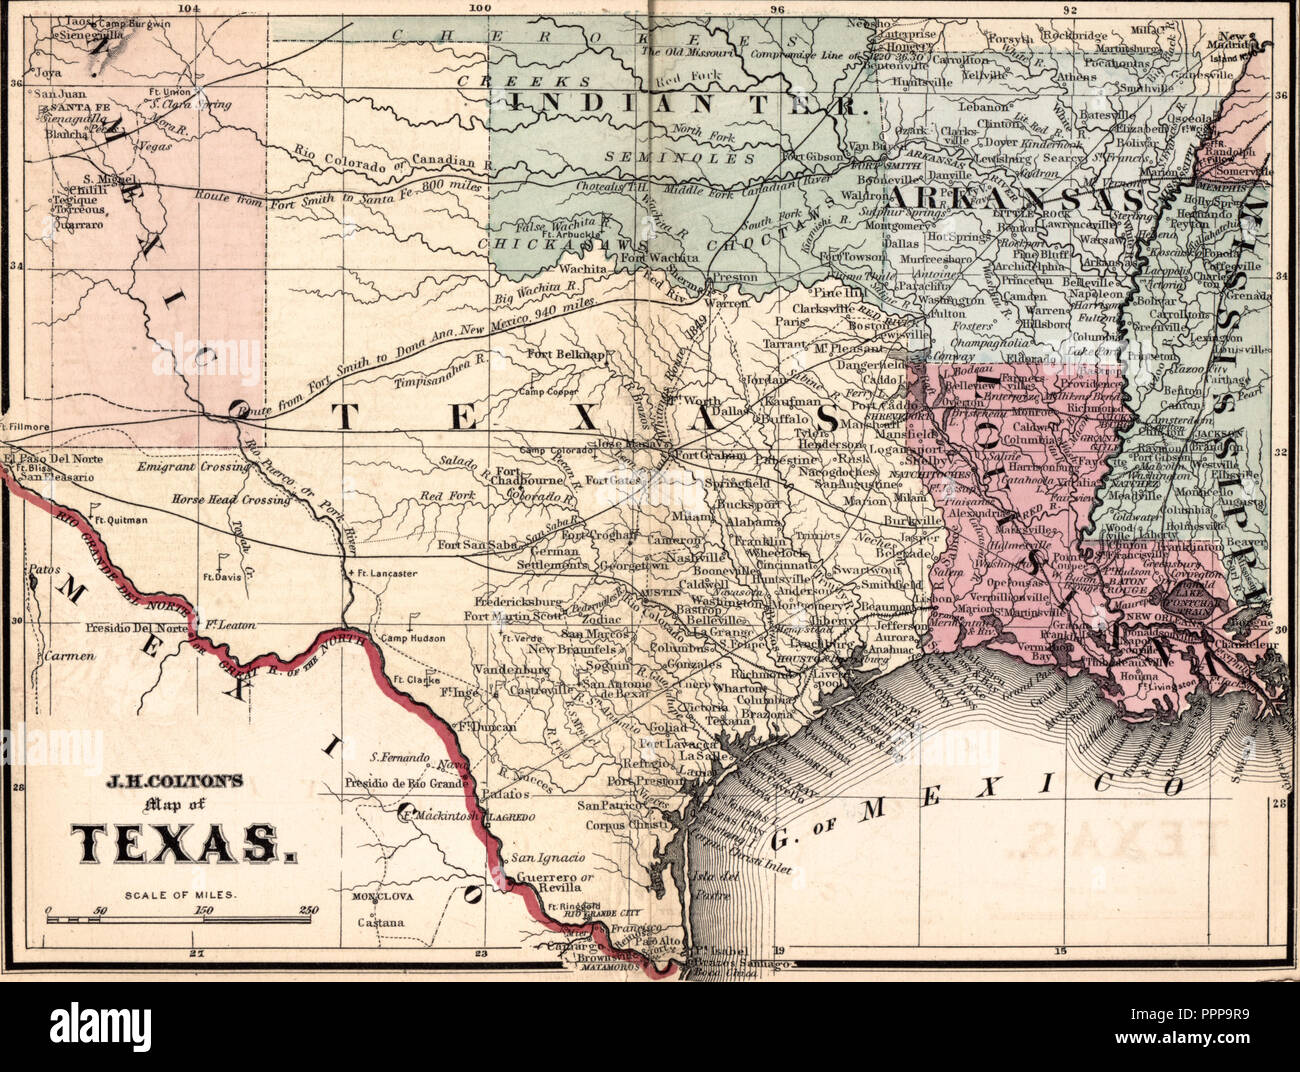 J H Colton's Map of Texas, circa 1863 Stock Photo